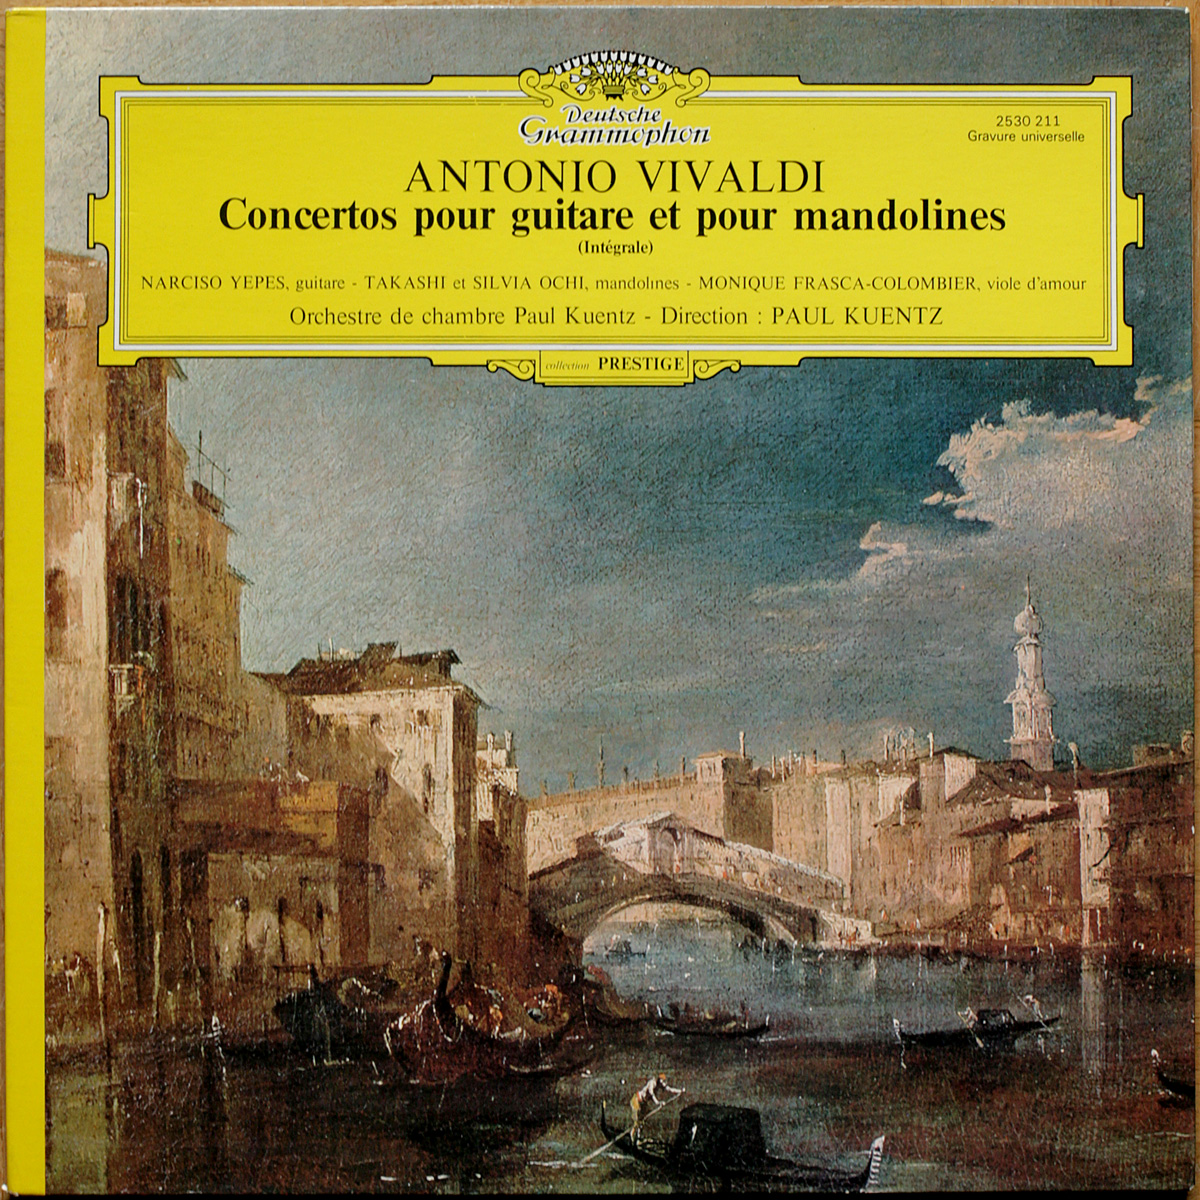 Vivaldi • Concertos pour guitare et pour mandolines (Intégrale) • DGG 2530 296 • Narciso Yepes • Takashi Ochi • Silvia Ochi • Orchestre De Chambre Paul Kuentz